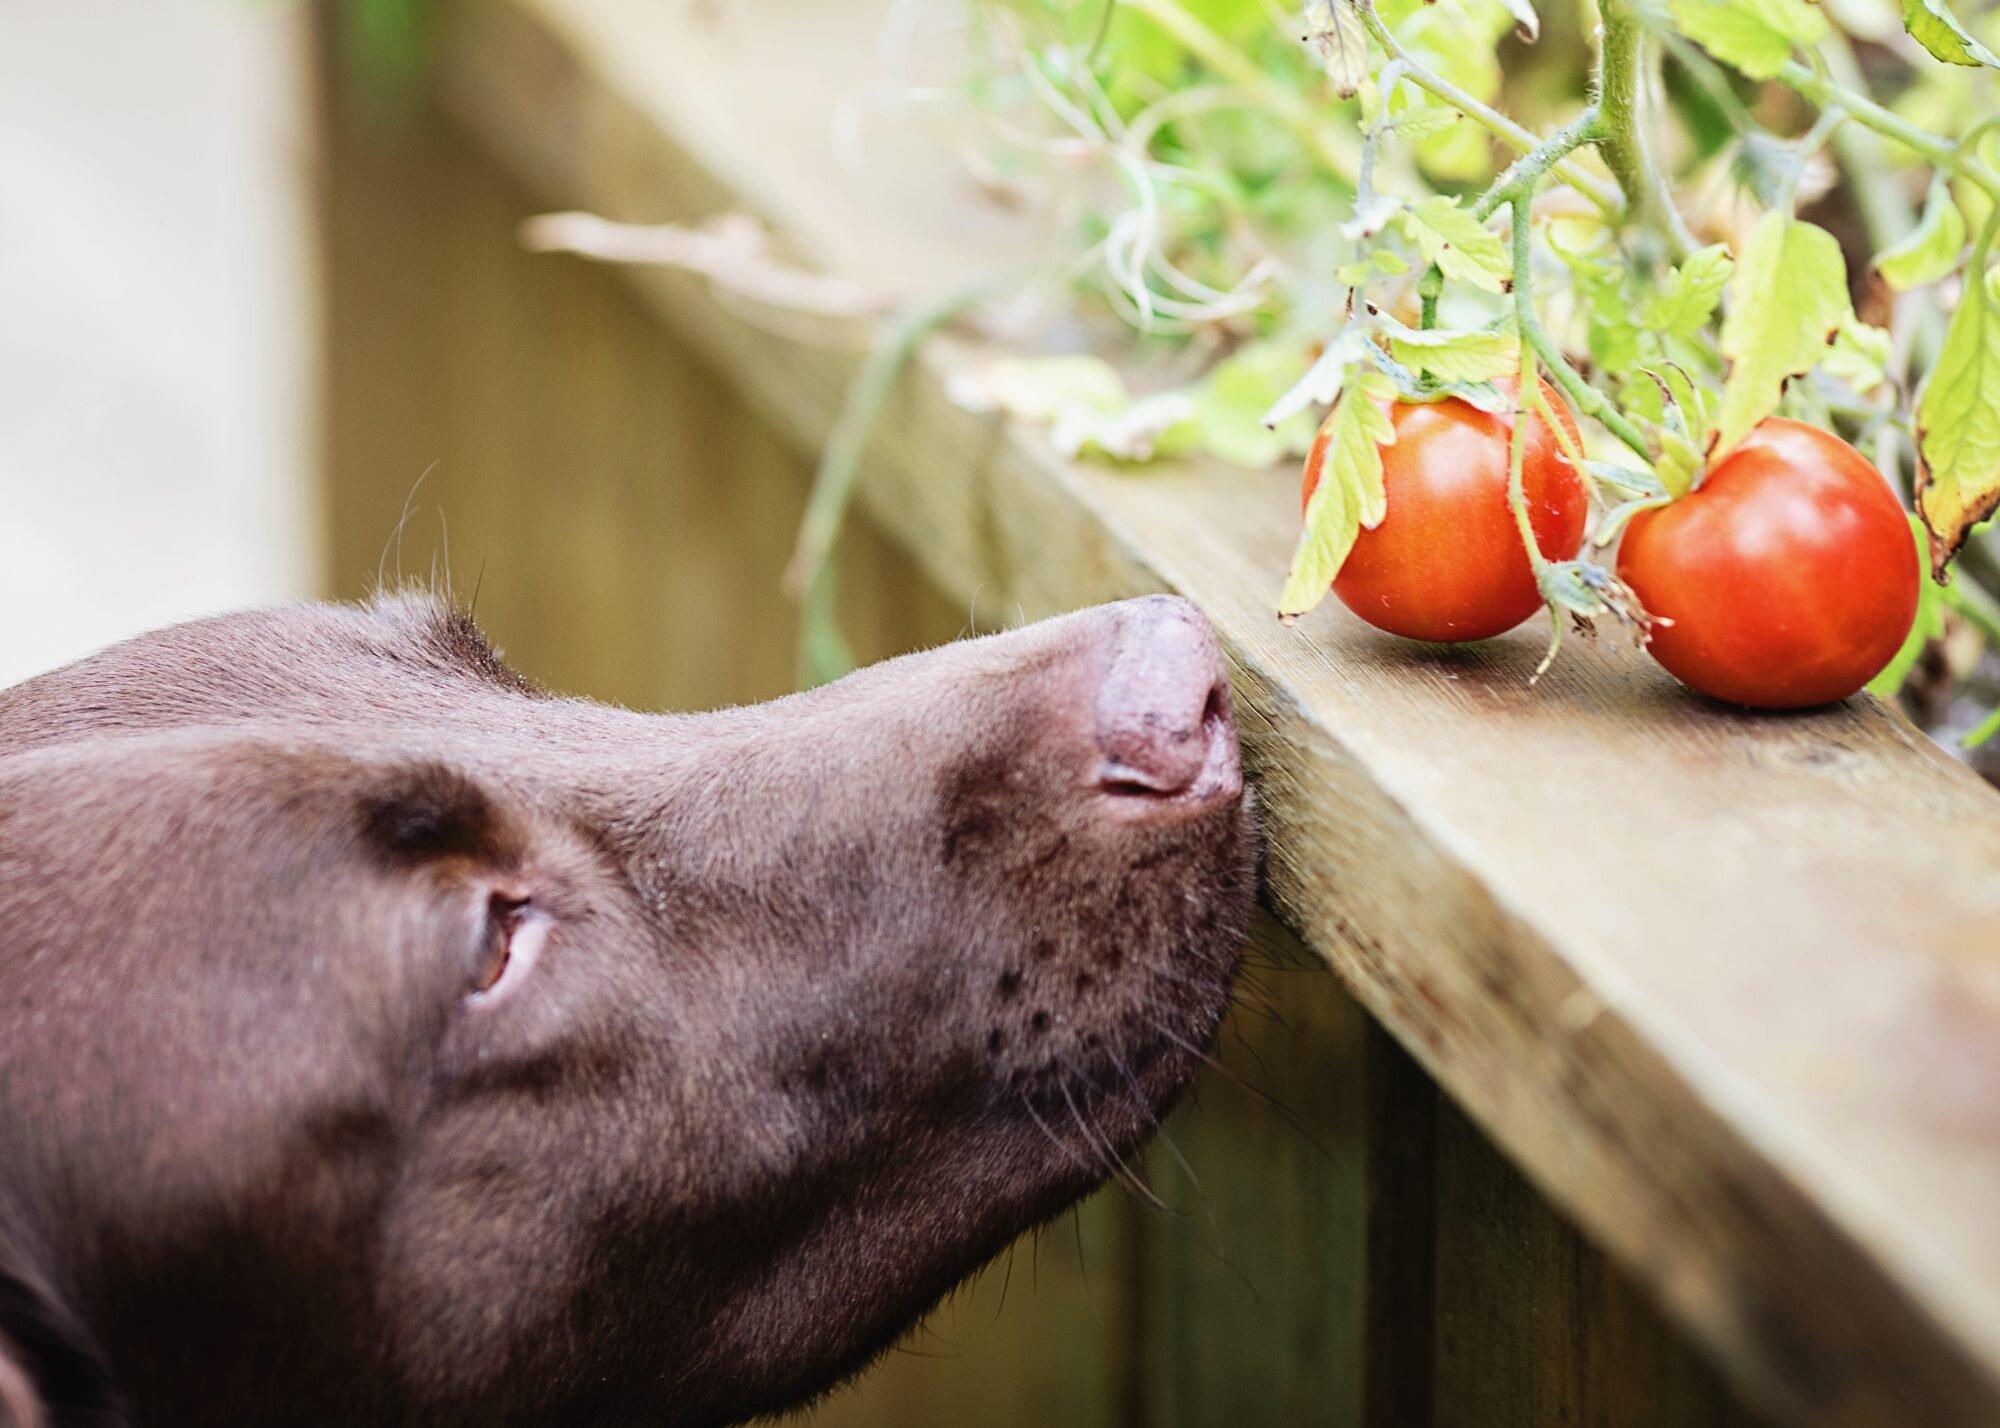 dog approaching tomato plant